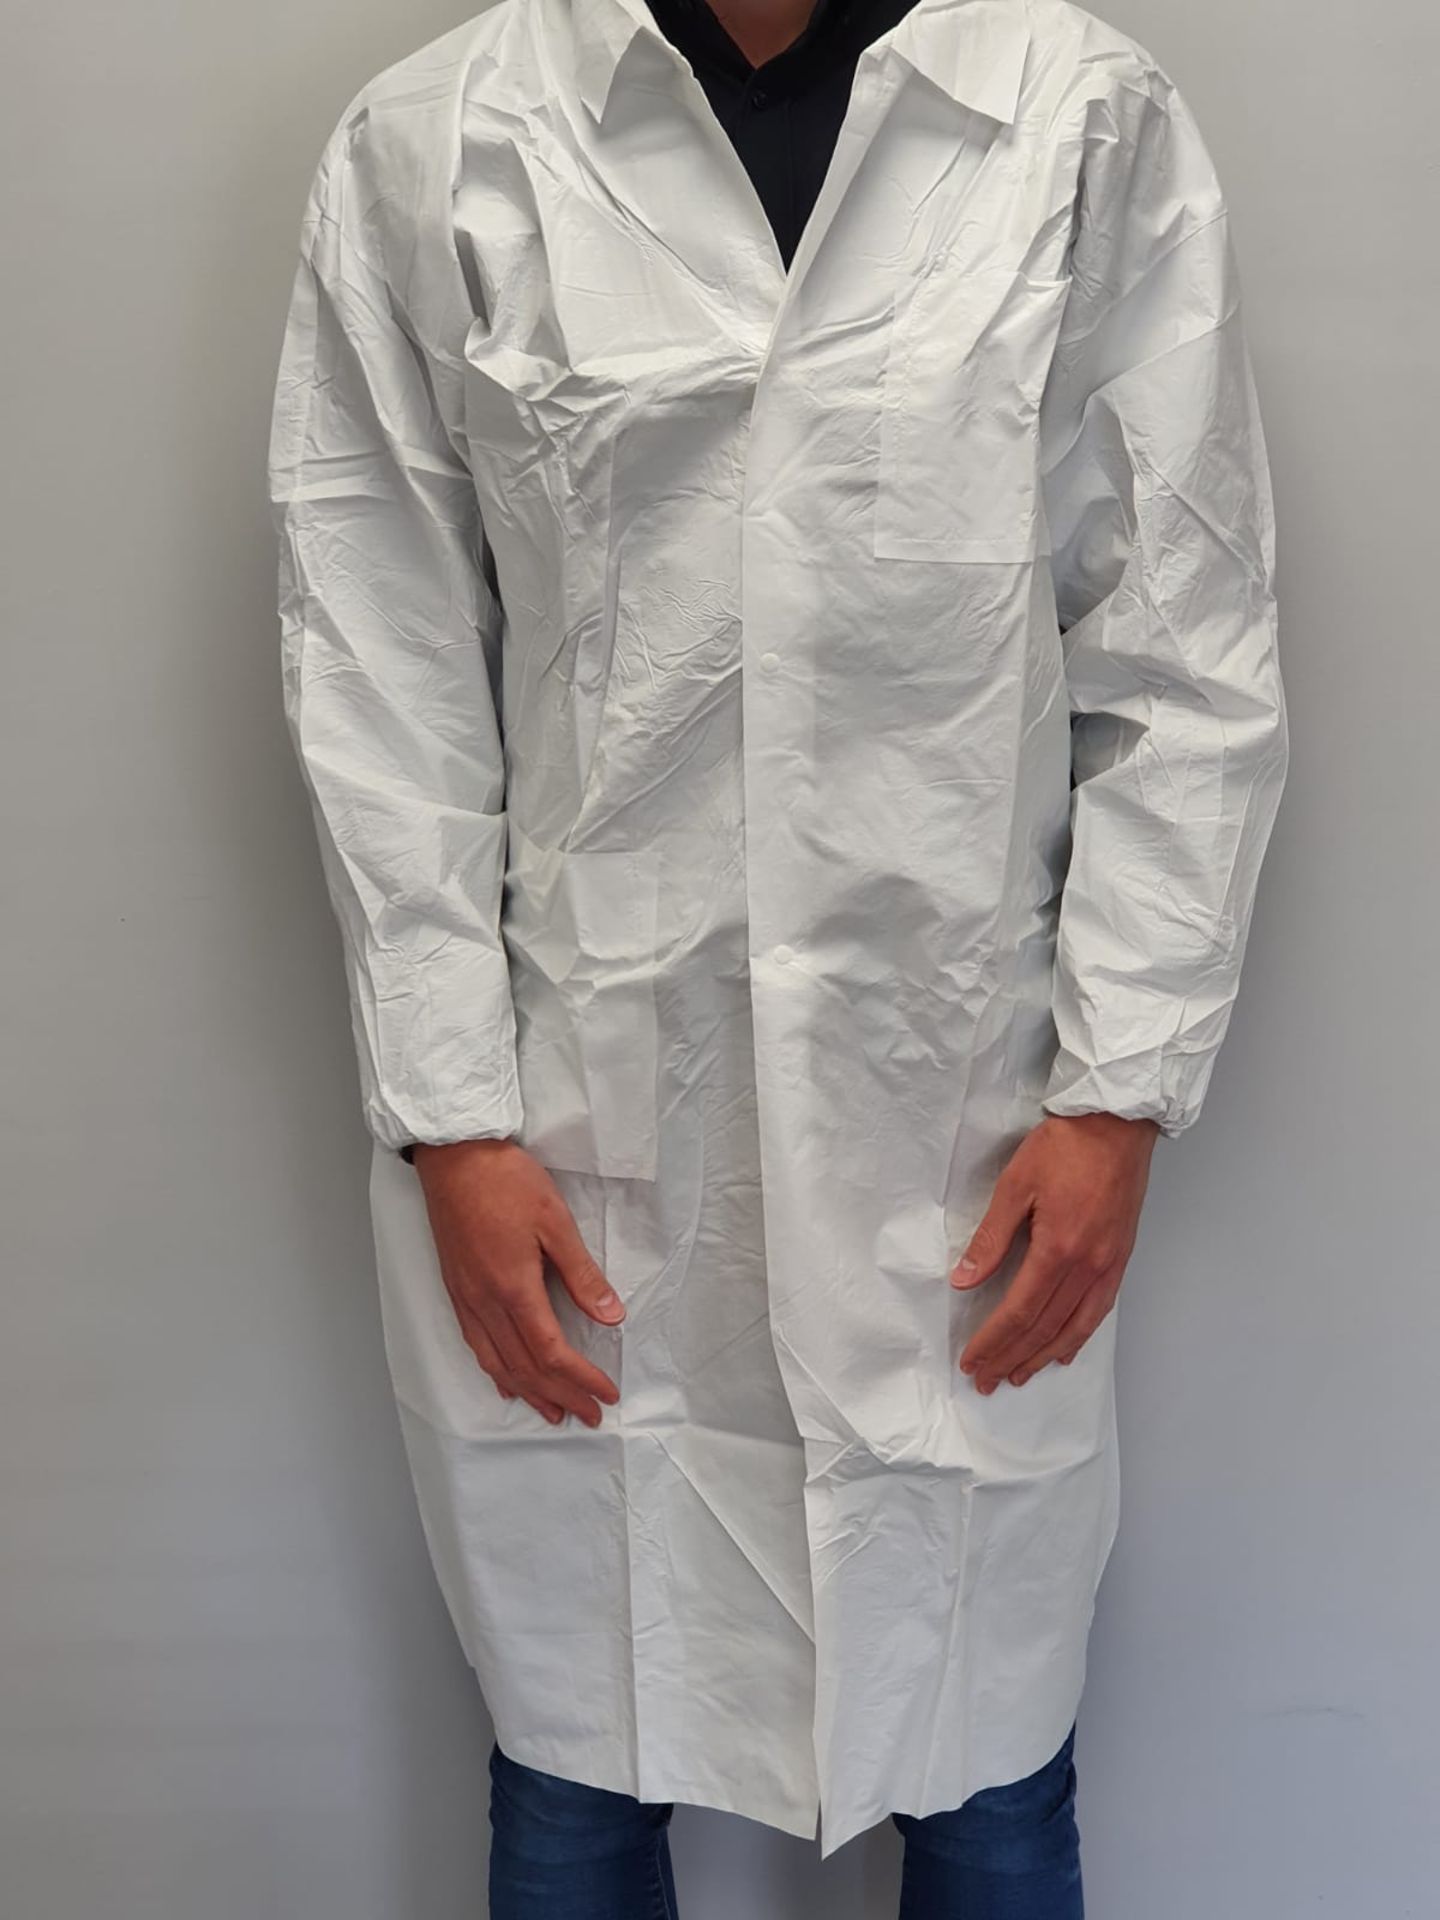 200 Disposable Lab Coats